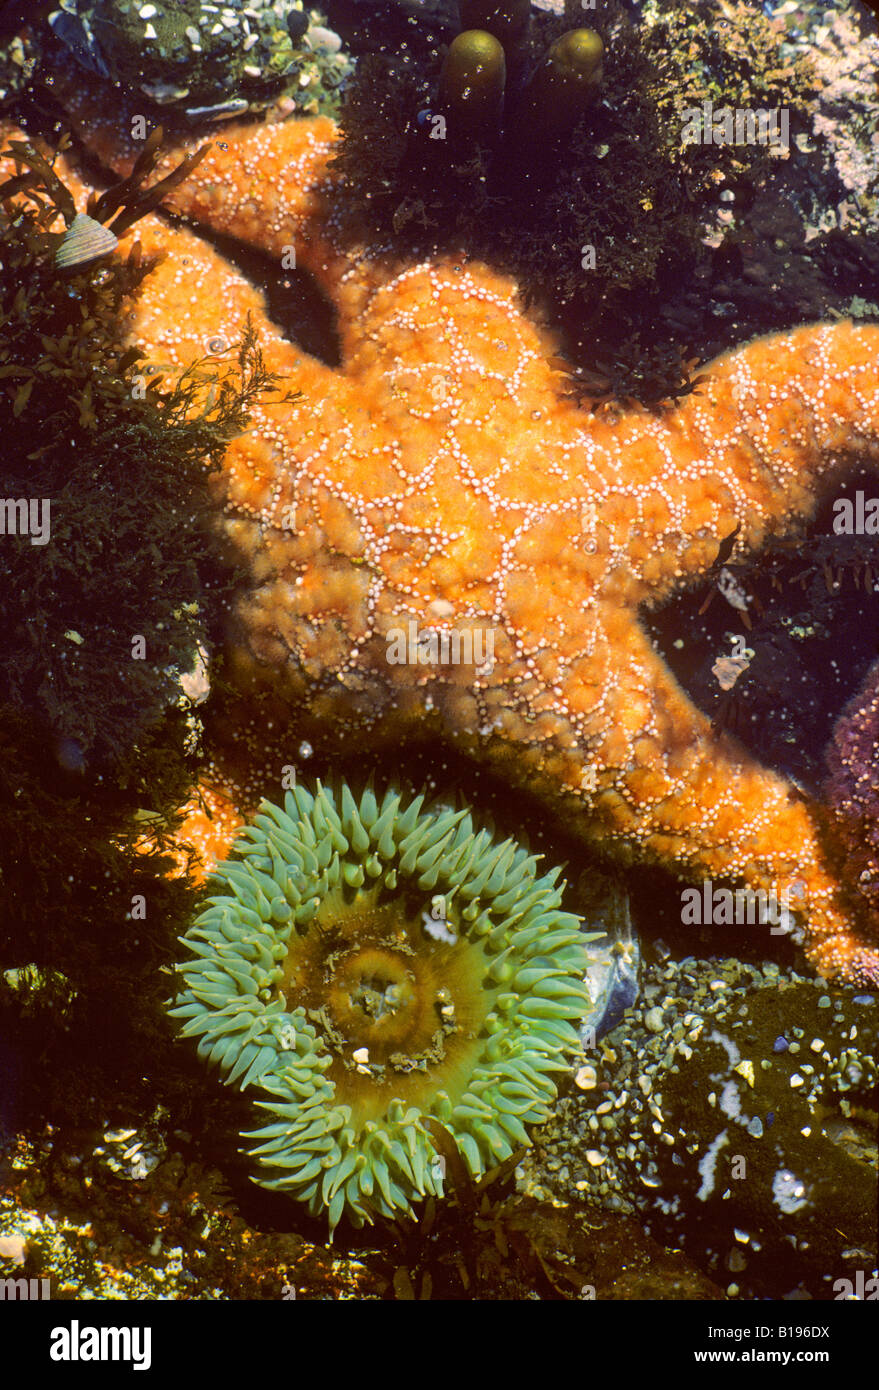 Sea star and anemone, intertidal zone, Pacific Rim National Park, British Columbia, Canada. Stock Photo